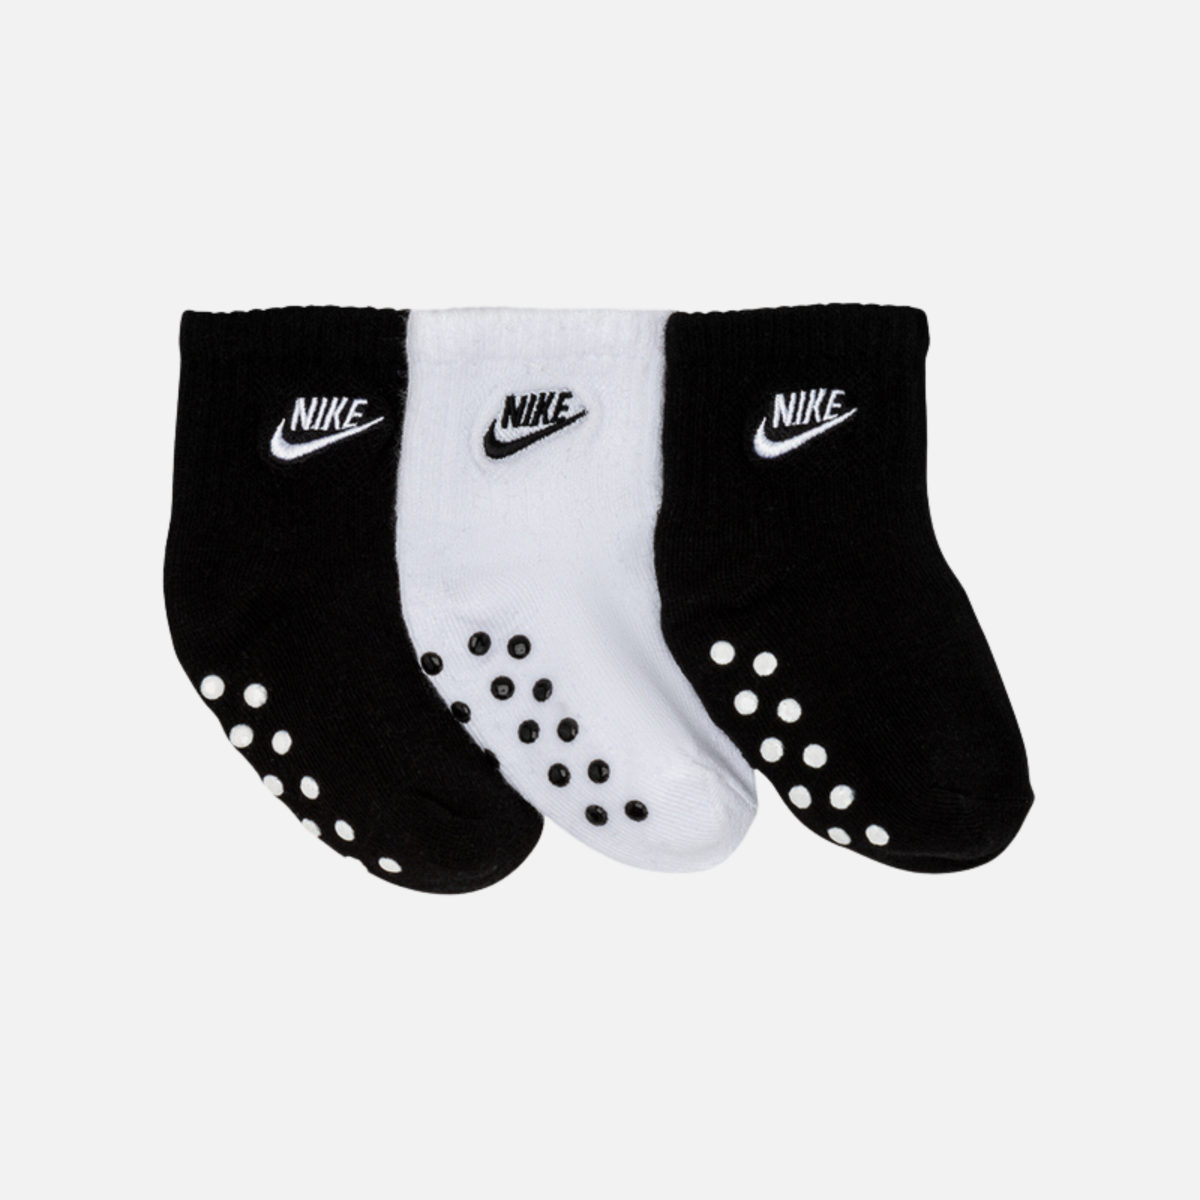 Calzini Nike Sportswear per neonati, confezione da 3 - neri/bianchi